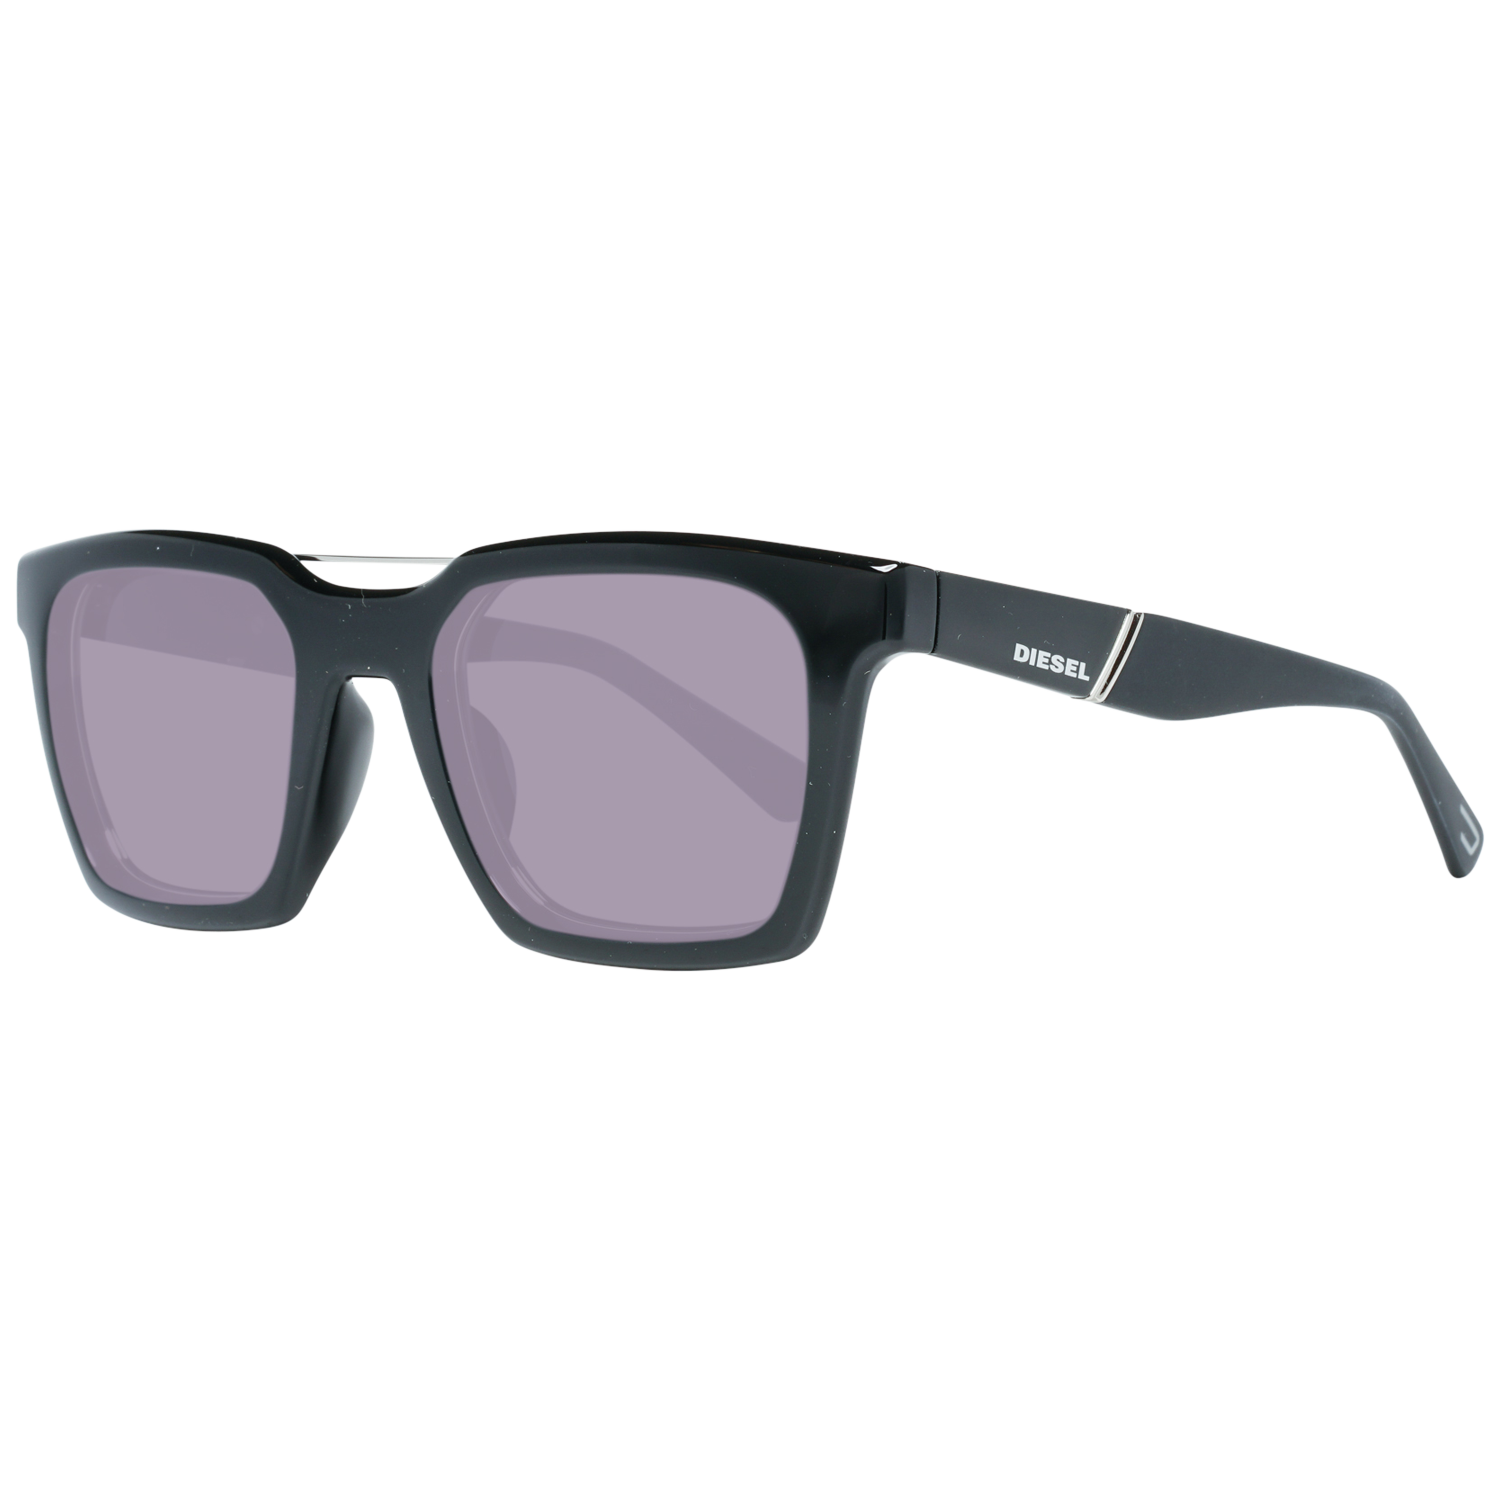 Diesel Sunglasses DL0250 01A 52